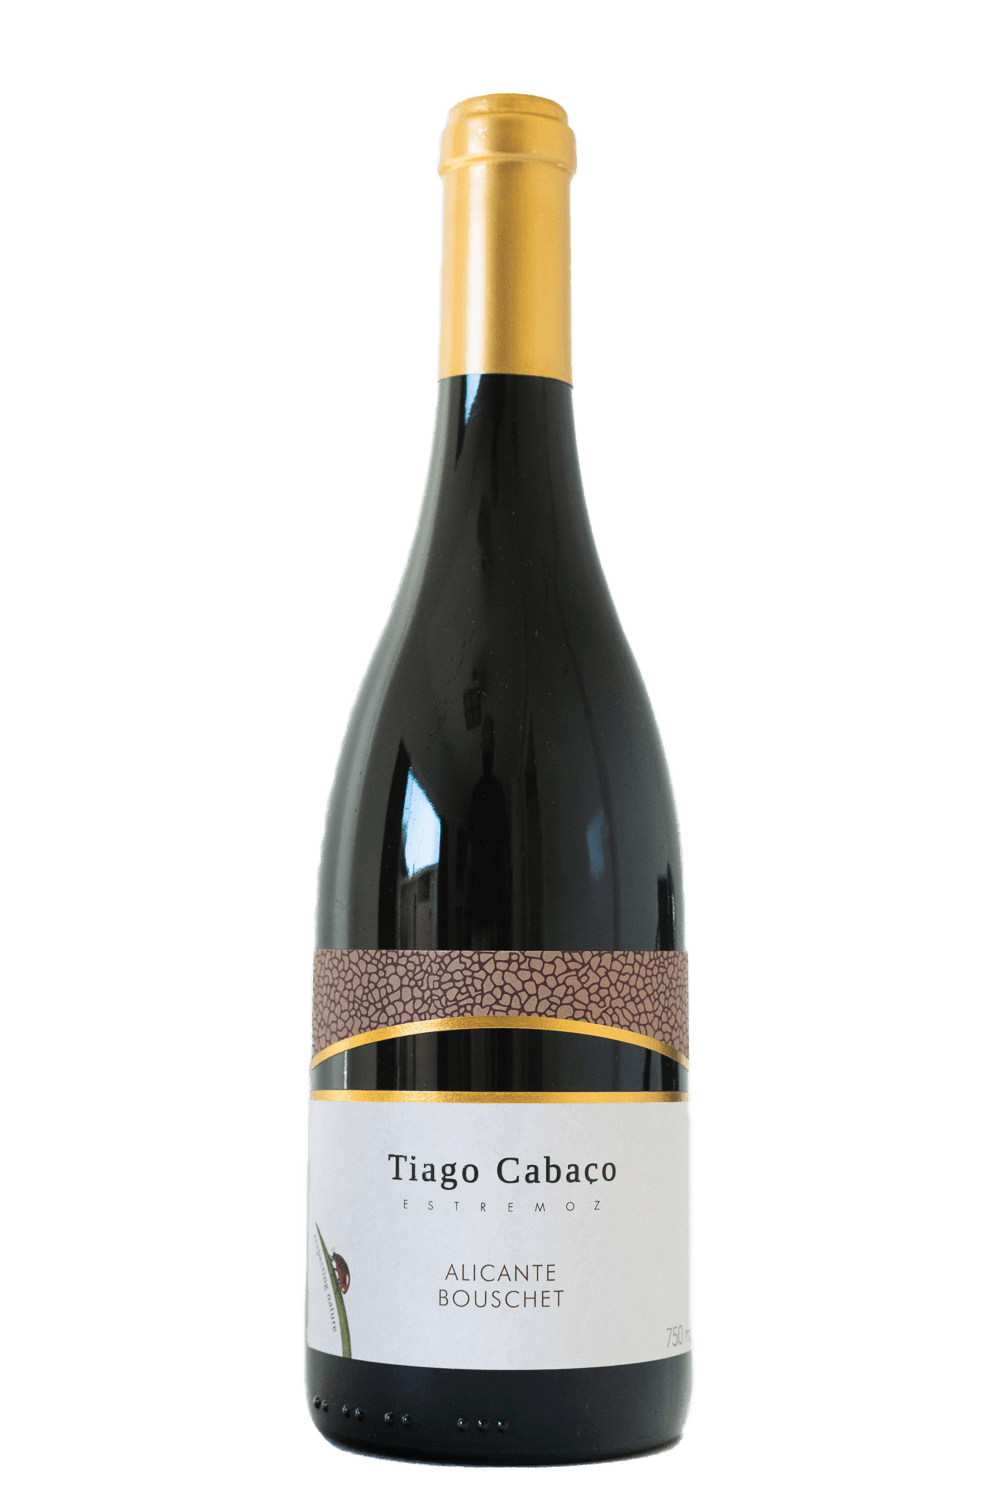 Tiago Cabaço - Alicante Bouschet 2018 - The Blend Wines